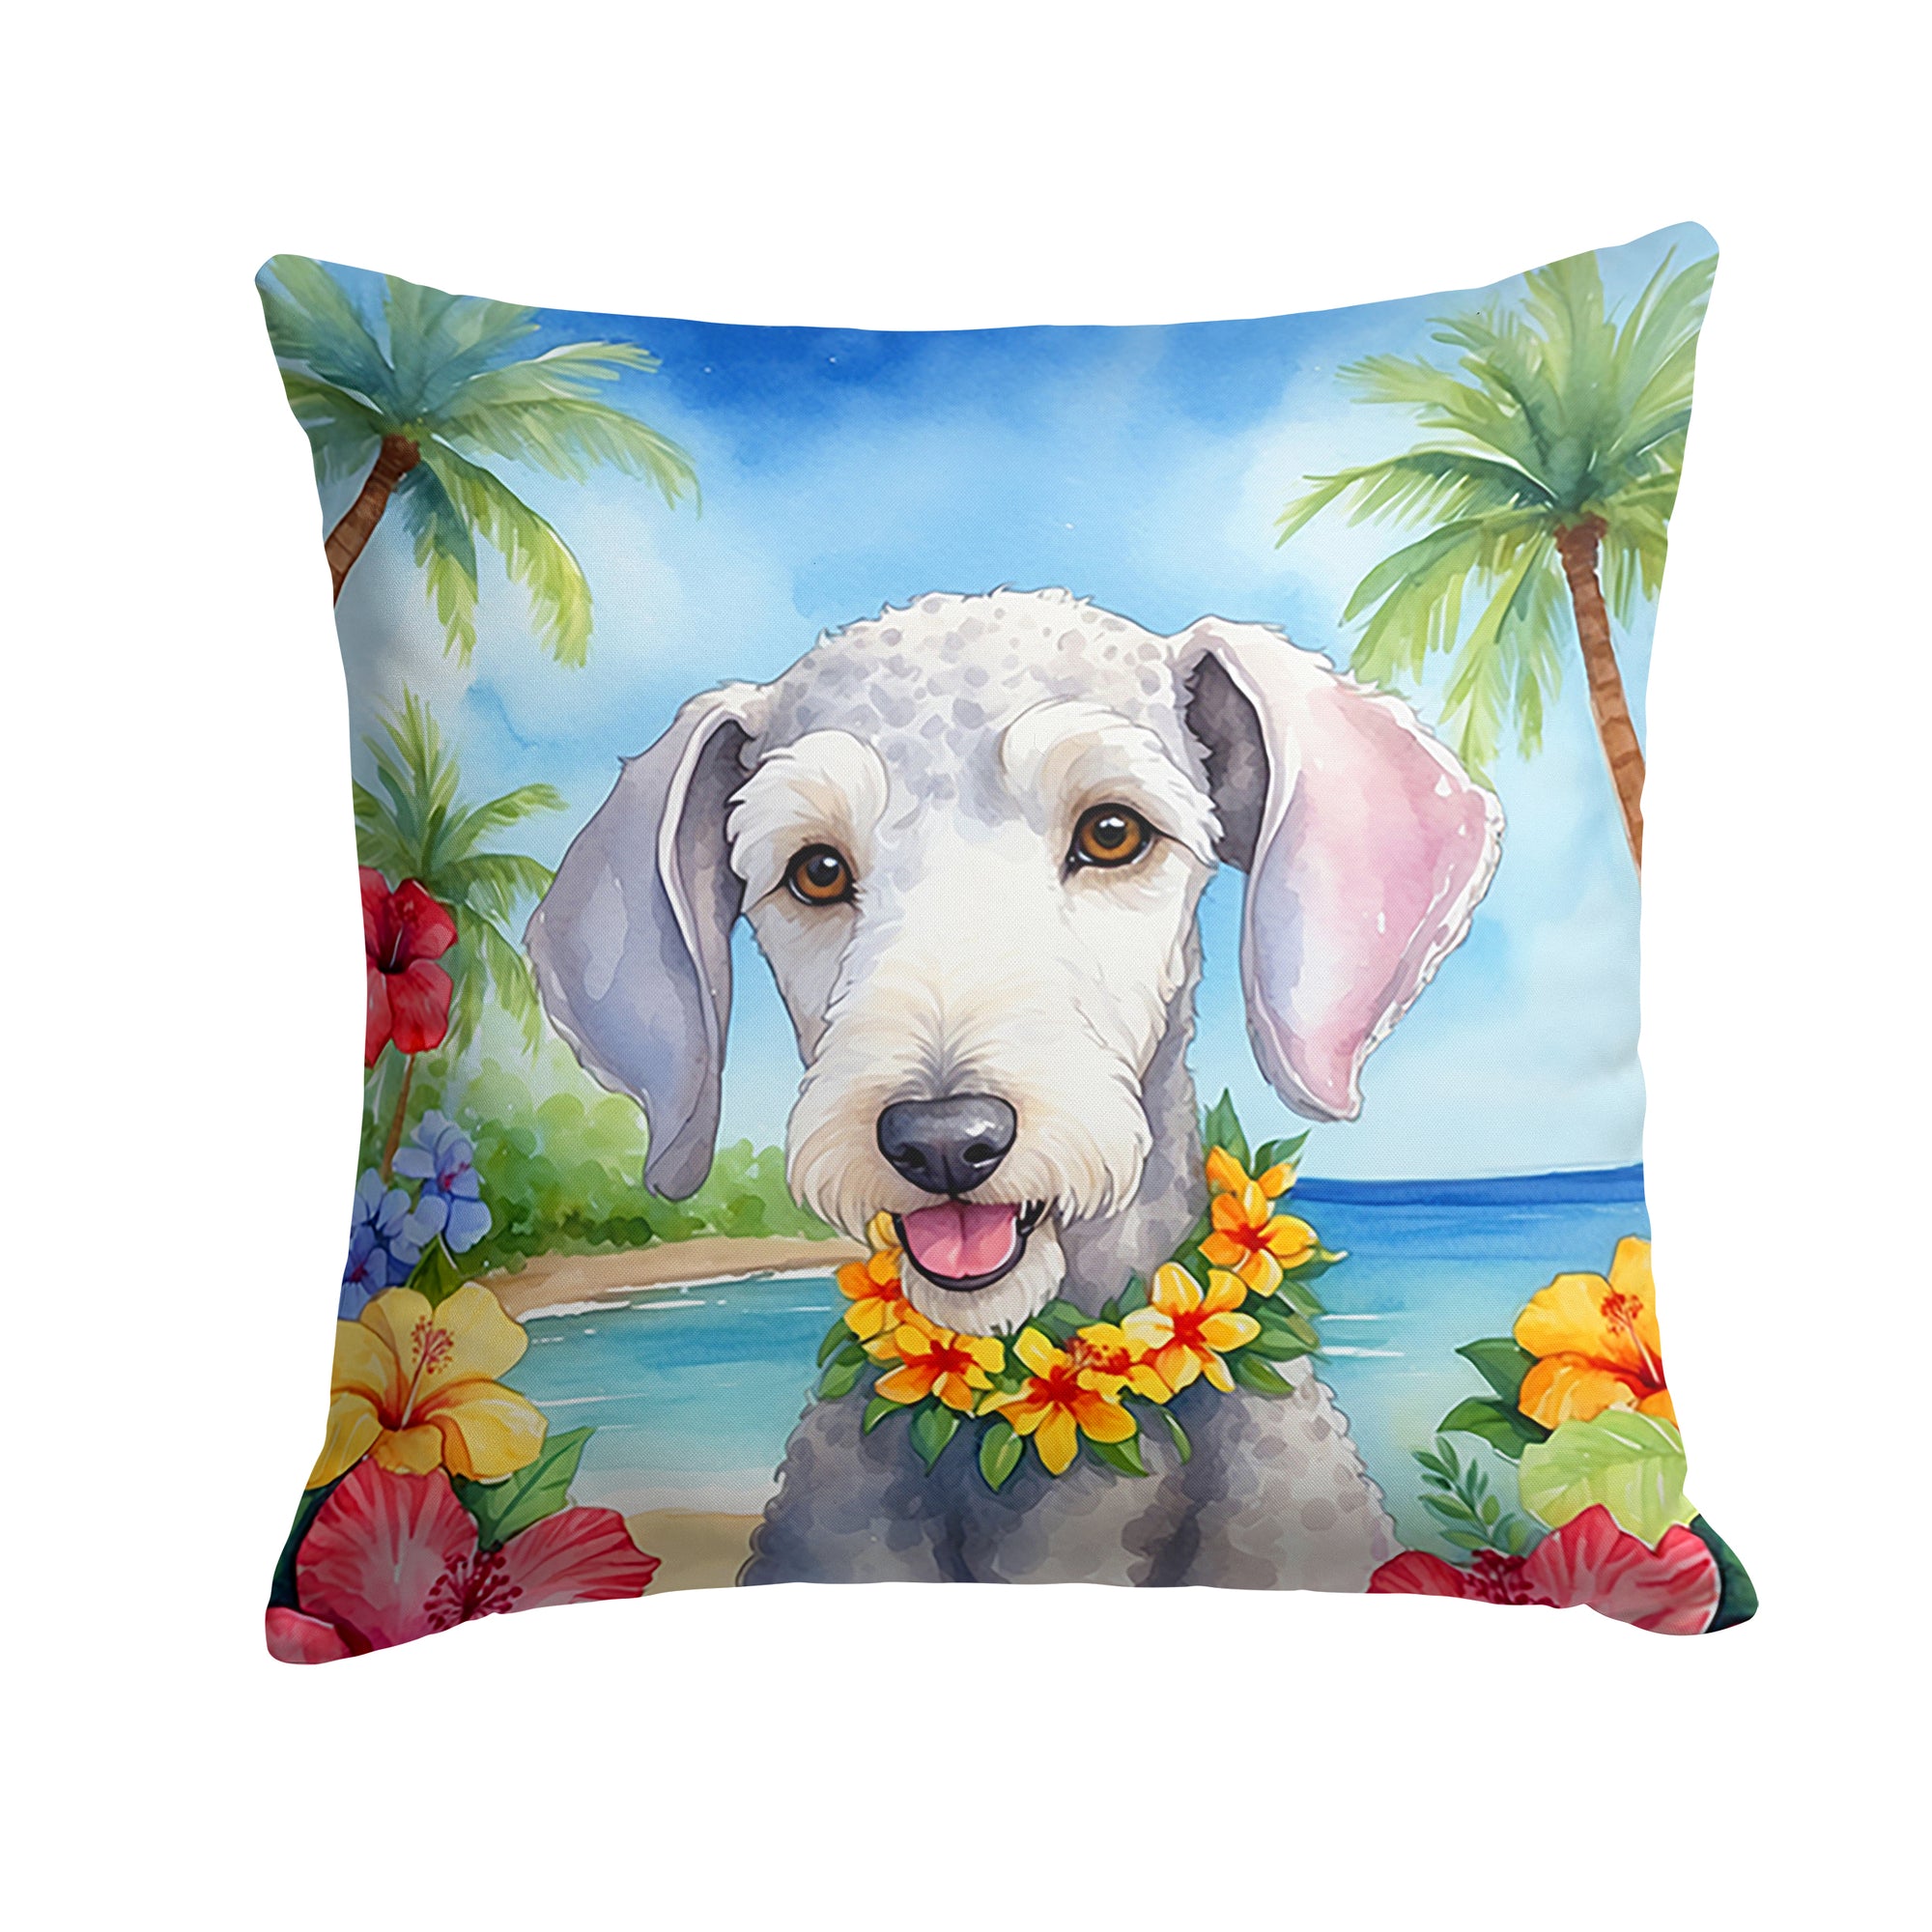 Buy this Bedlington Terrier Luau Throw Pillow